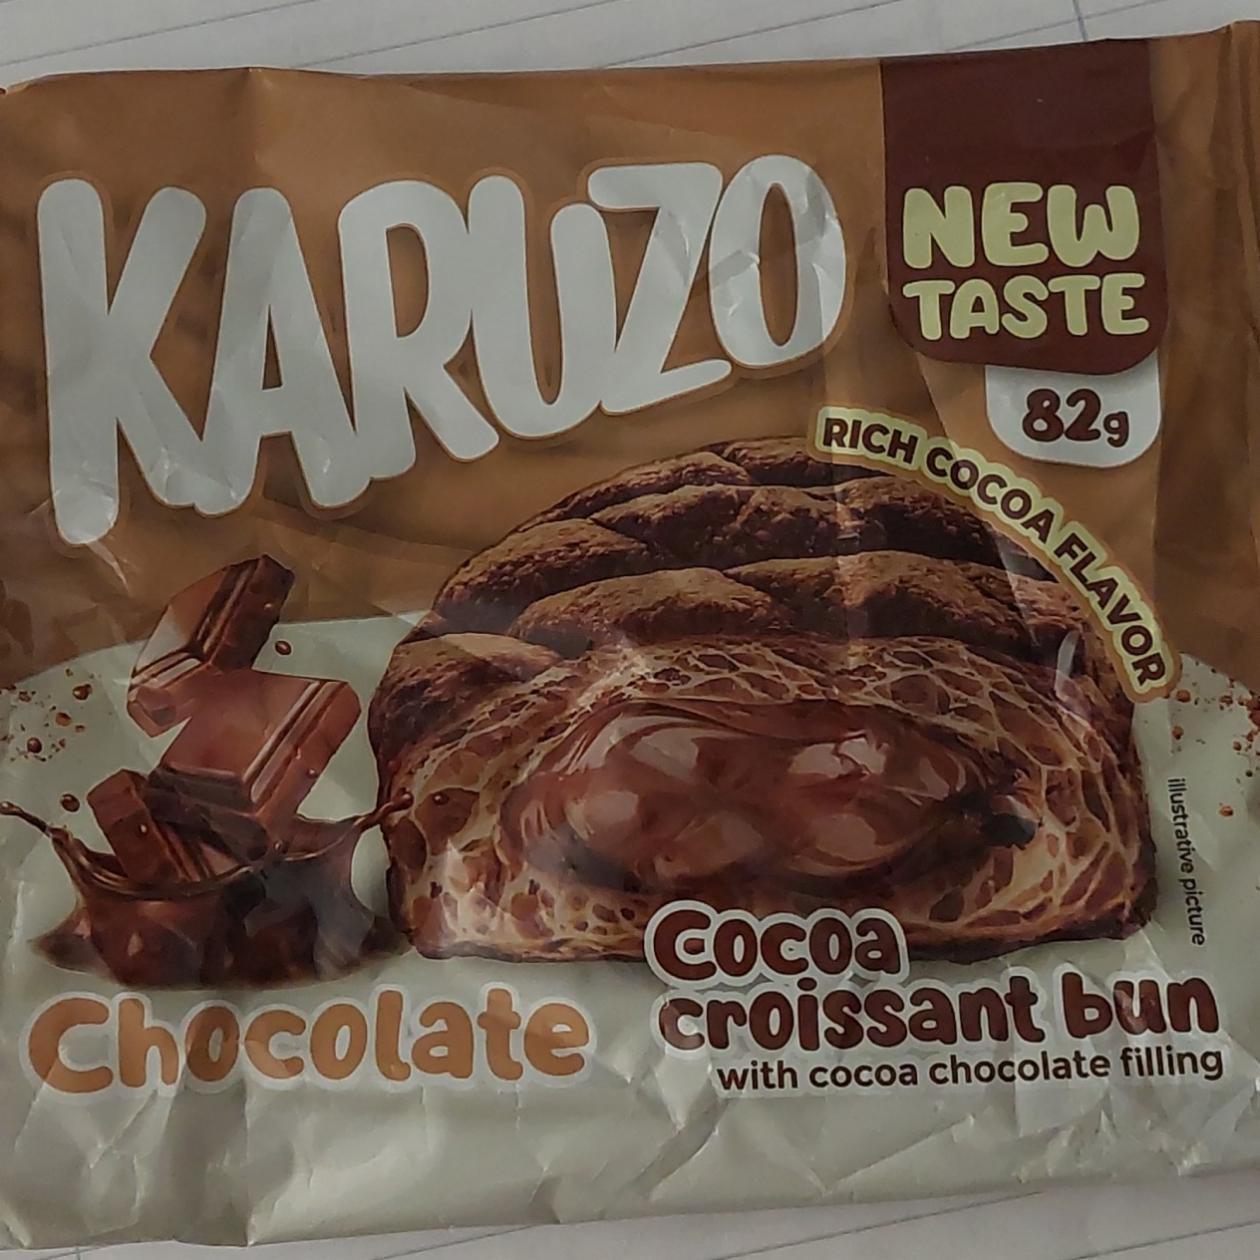 Fotografie - chocolate cocoa croissant bun with cocoa chocolate filling Karuzo